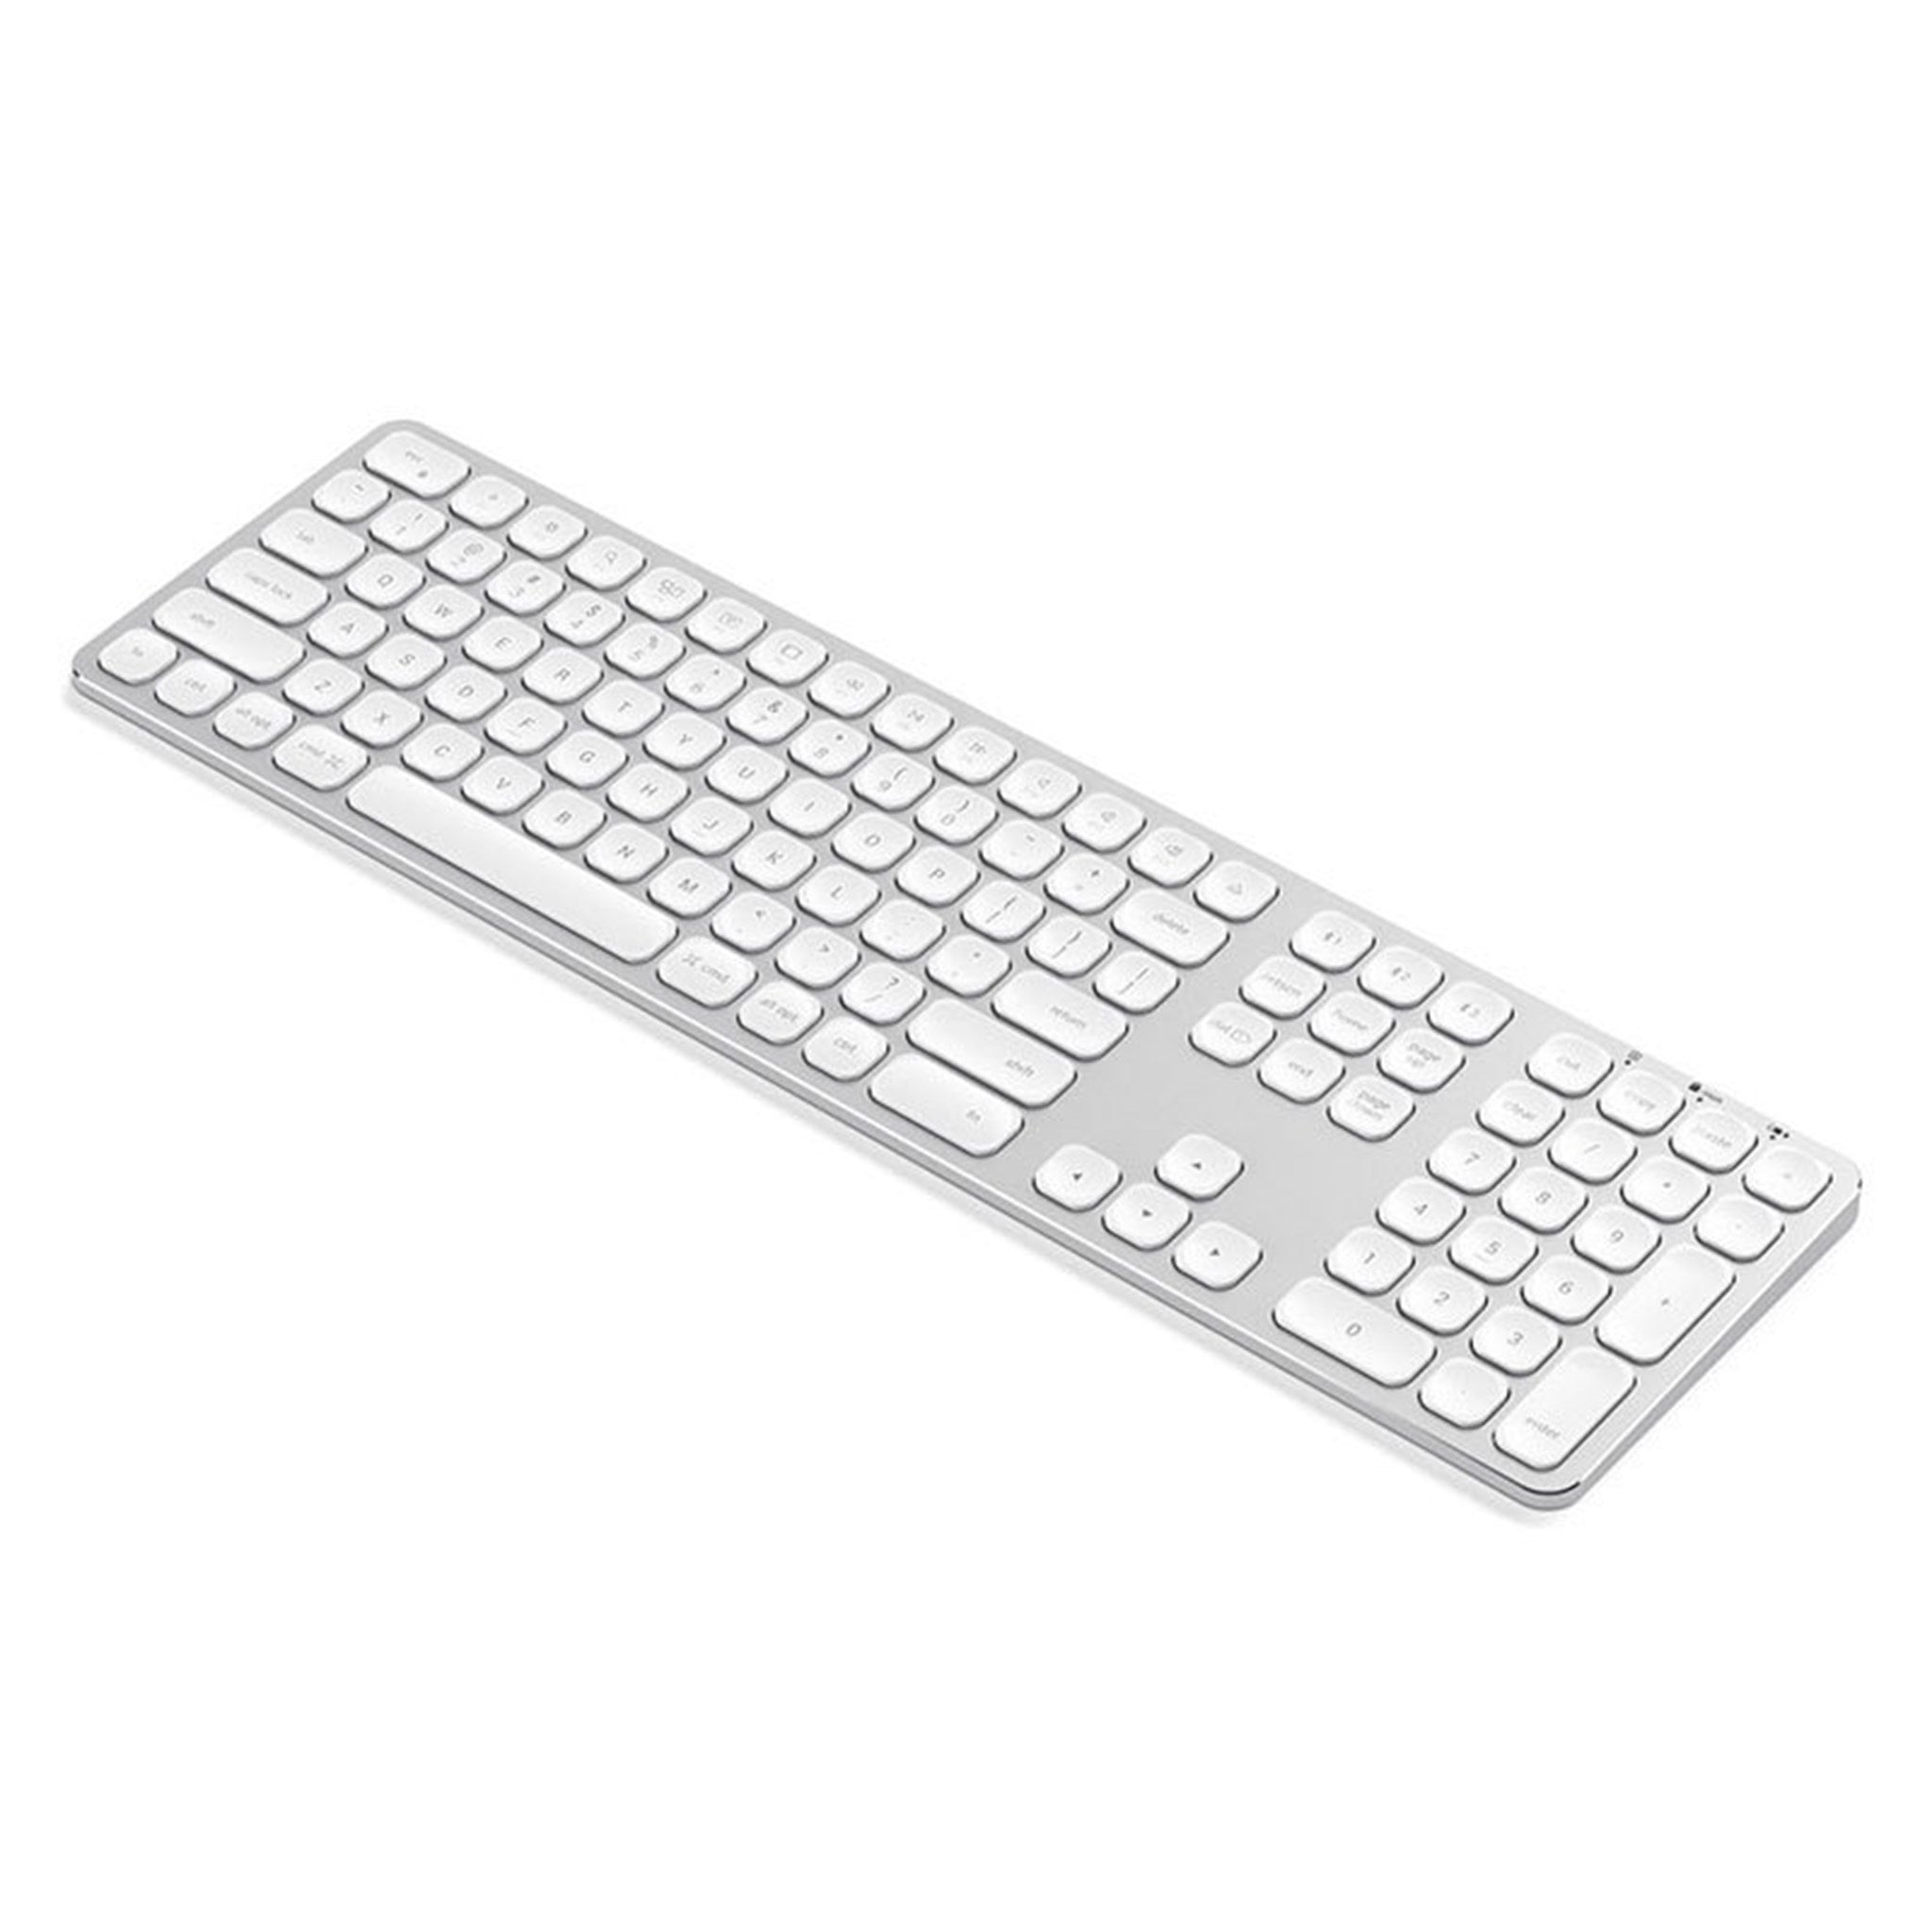 Satechi-trådløst-tastatur-til-MacBook-og-iMac-ST-AMBKS-ND-1.jpg